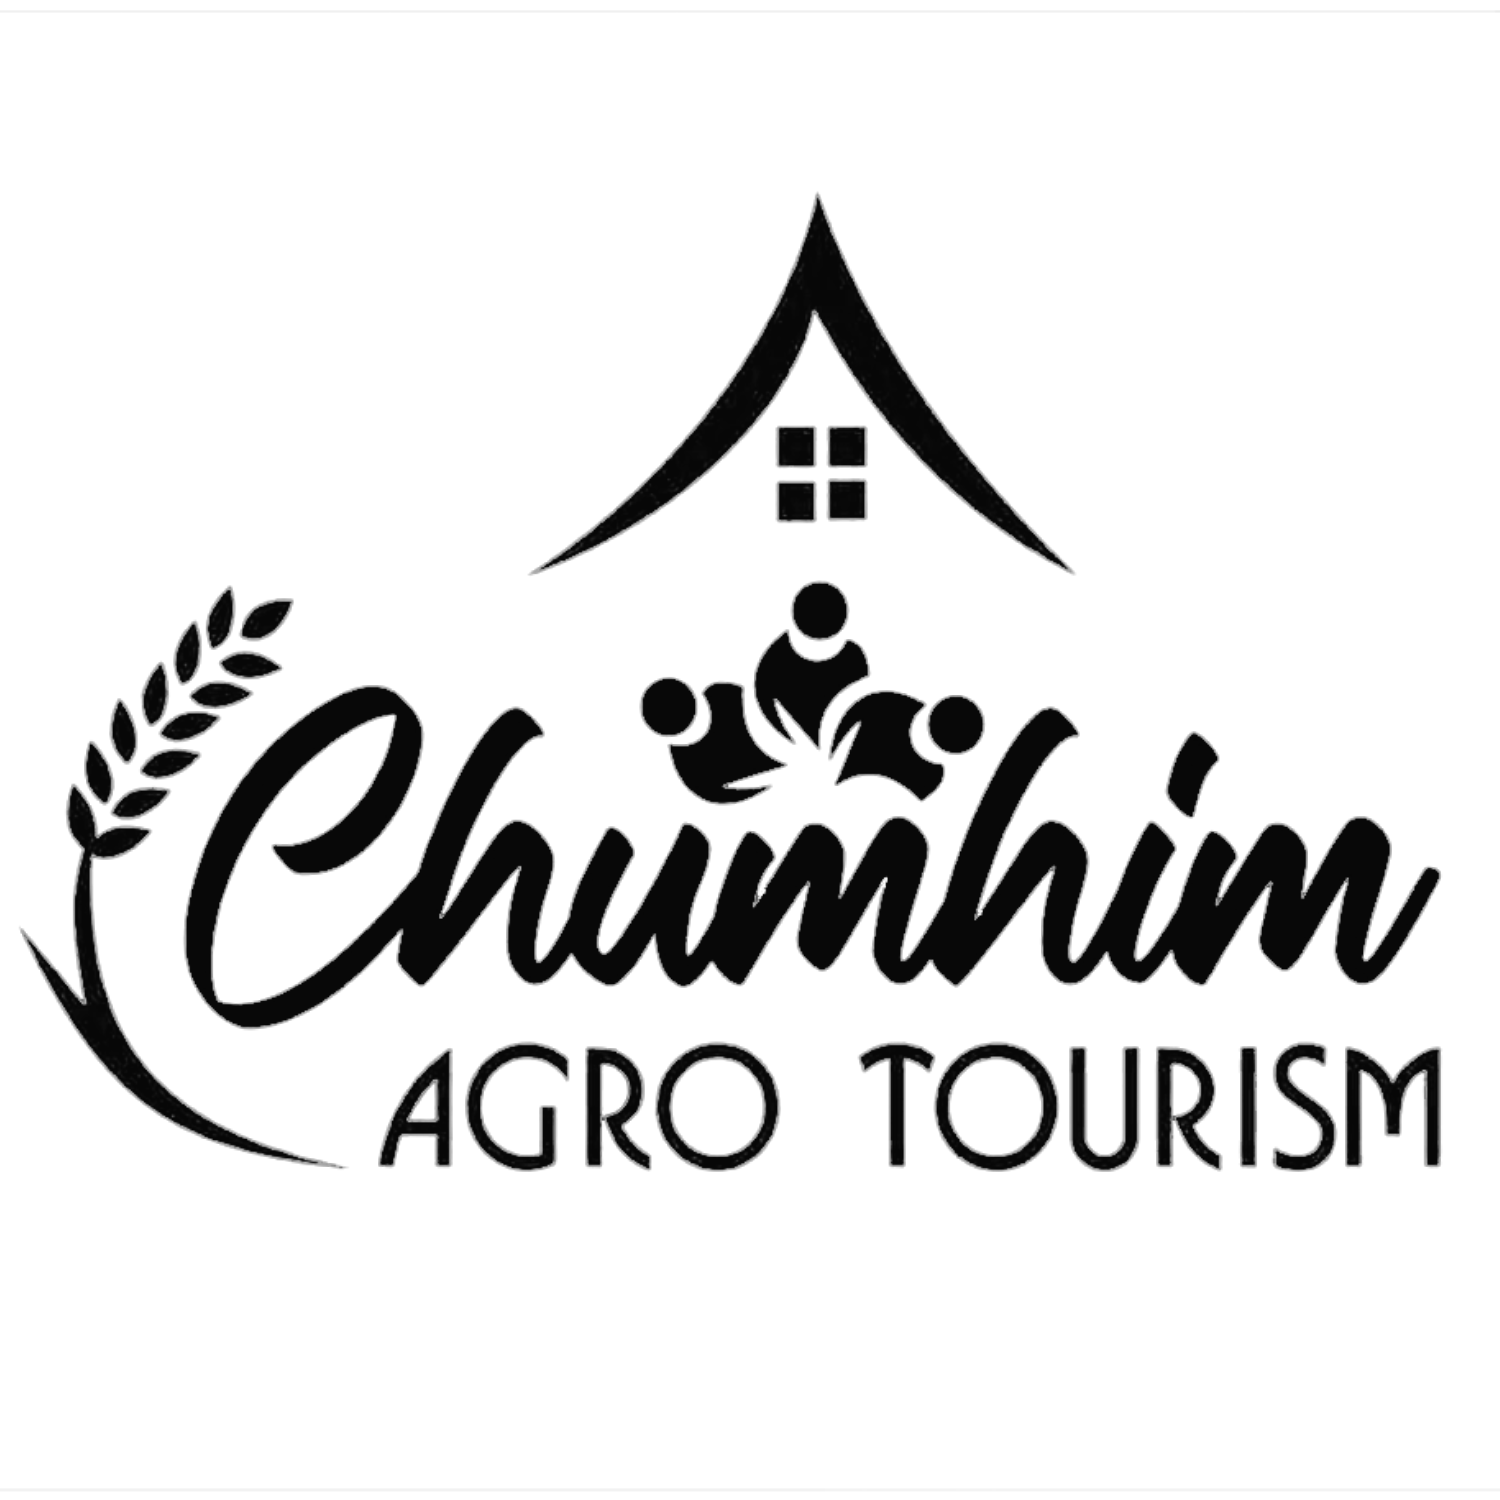 chumhim agro tourism resort